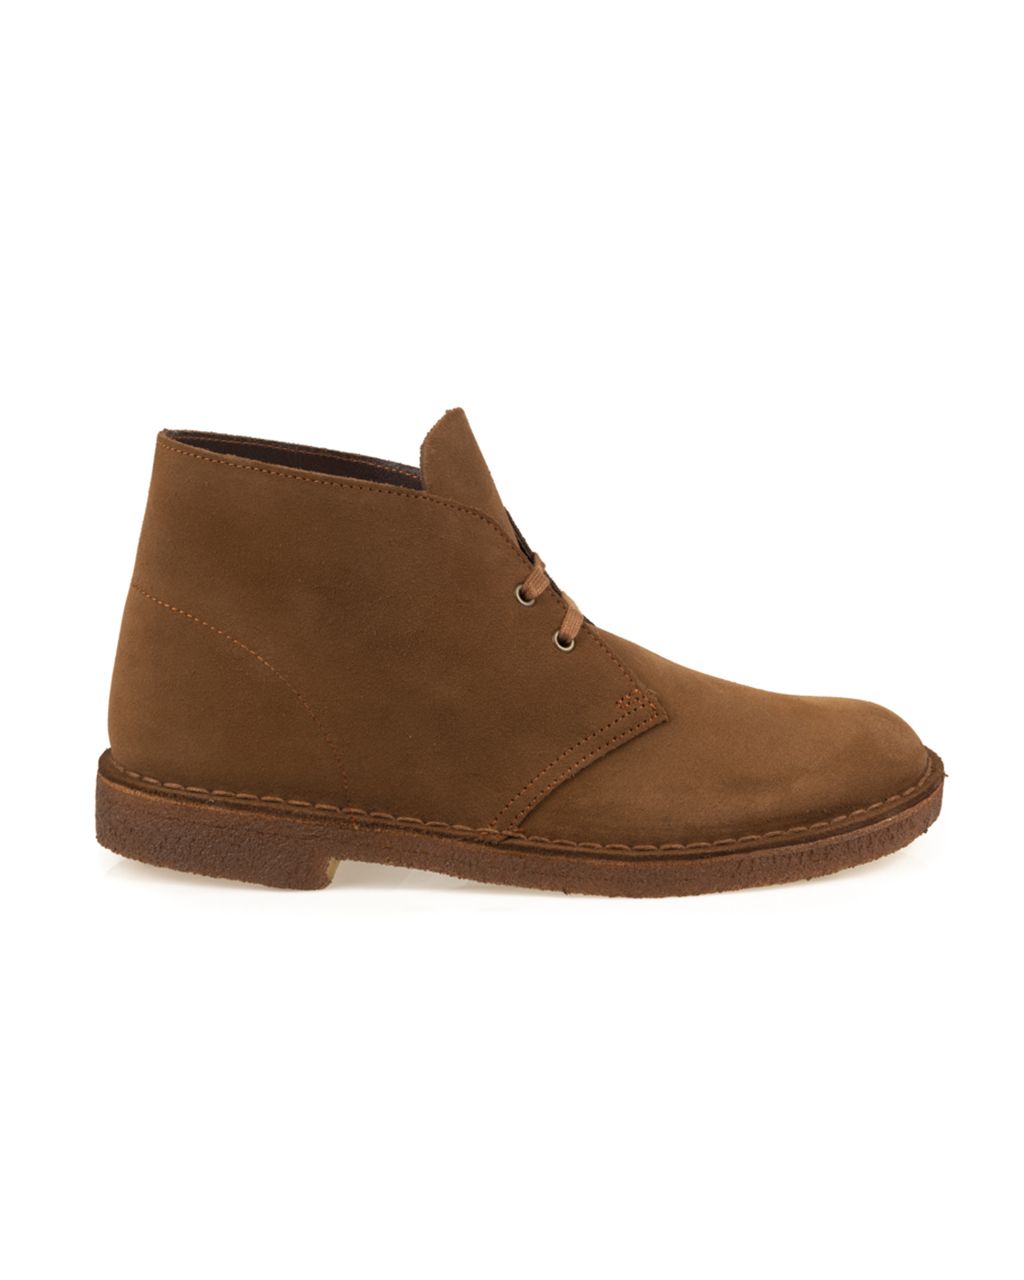 Clarks Desert Boots Cognac 066773-001-10,5